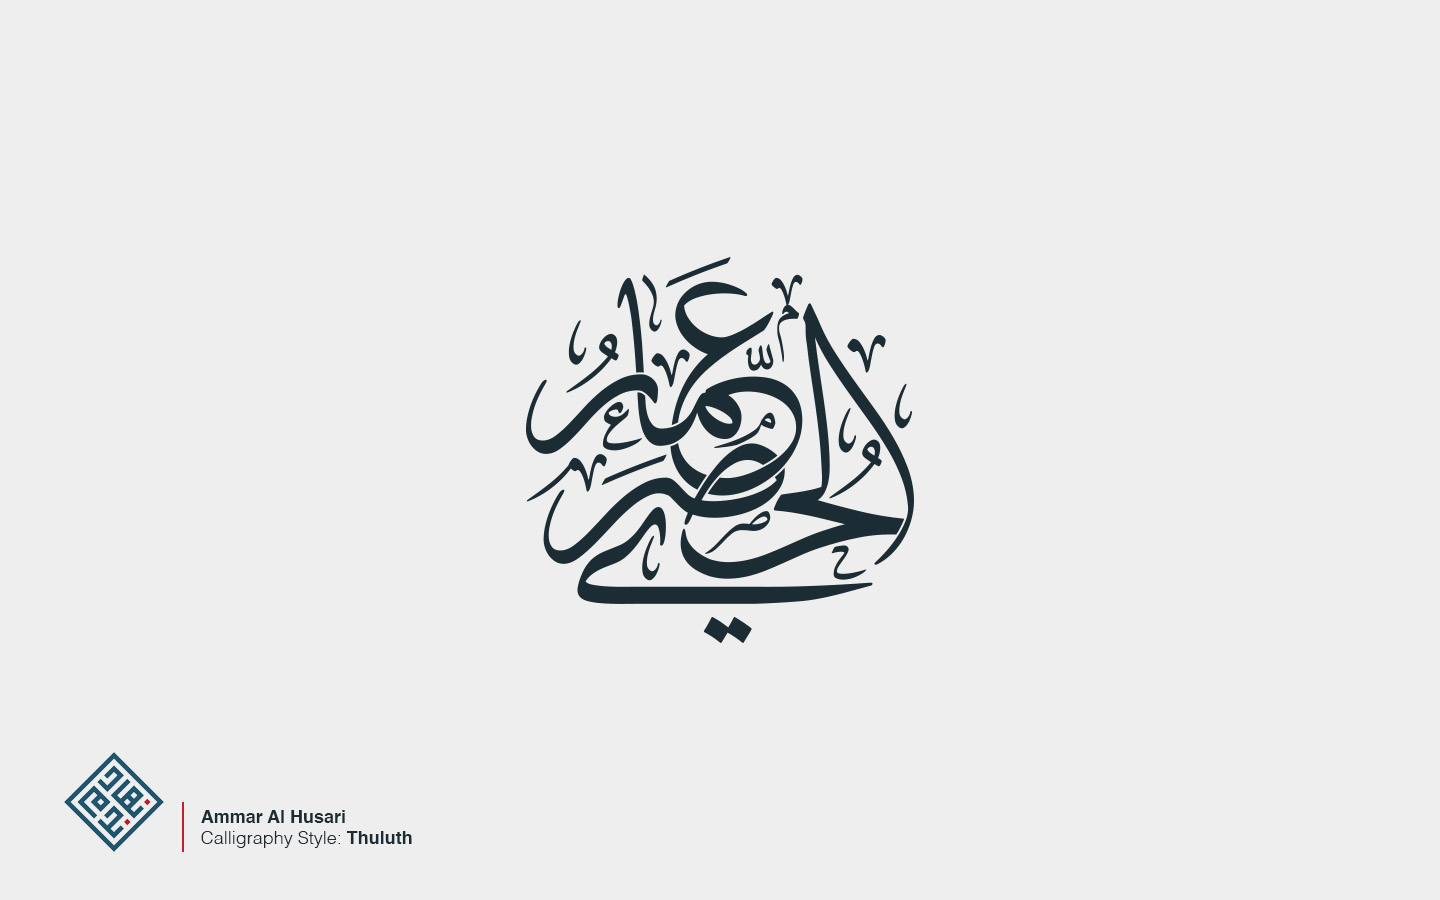 Ammar Al Husari Arabic Calligraphy Logo designed by Nihad Nadam